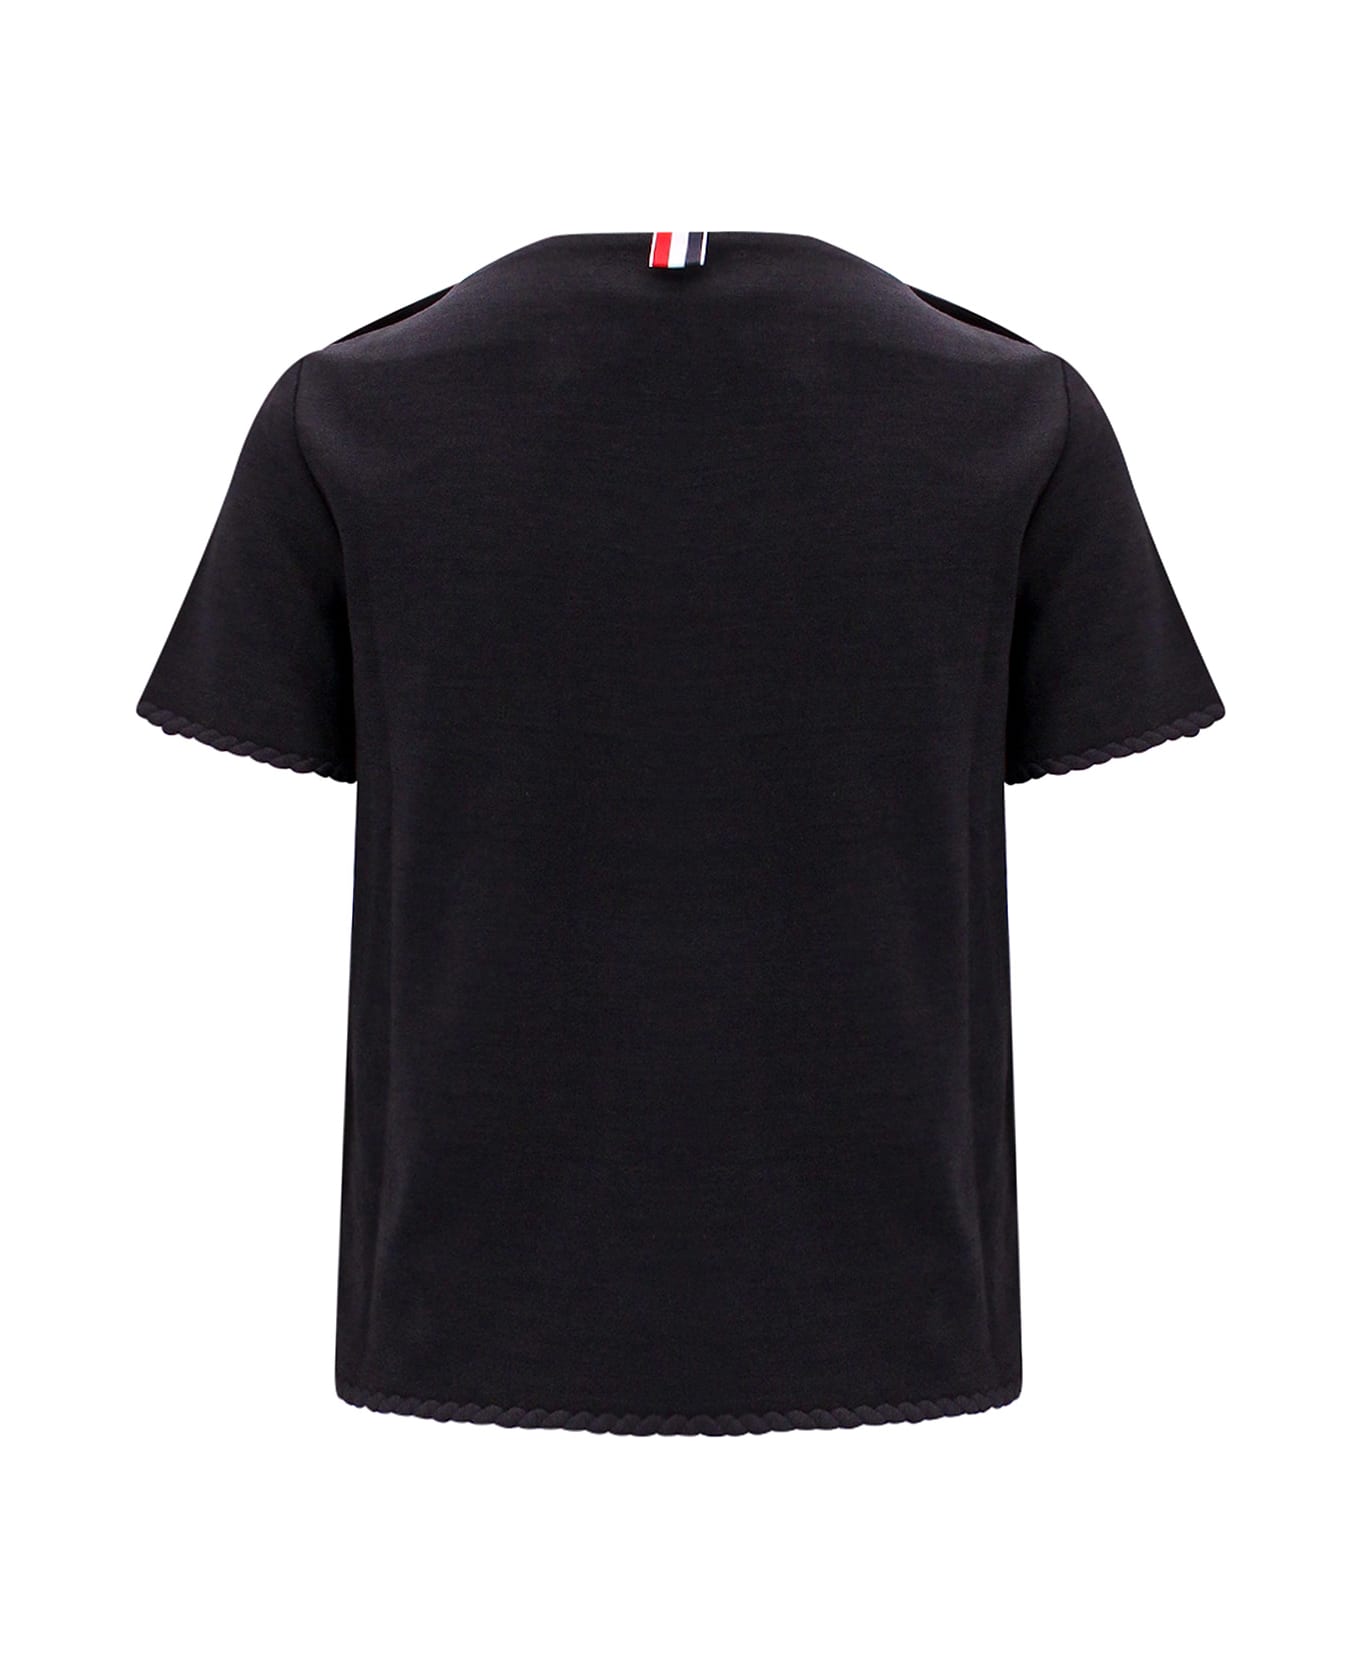 Thom Browne T-shirt - Black Tシャツ